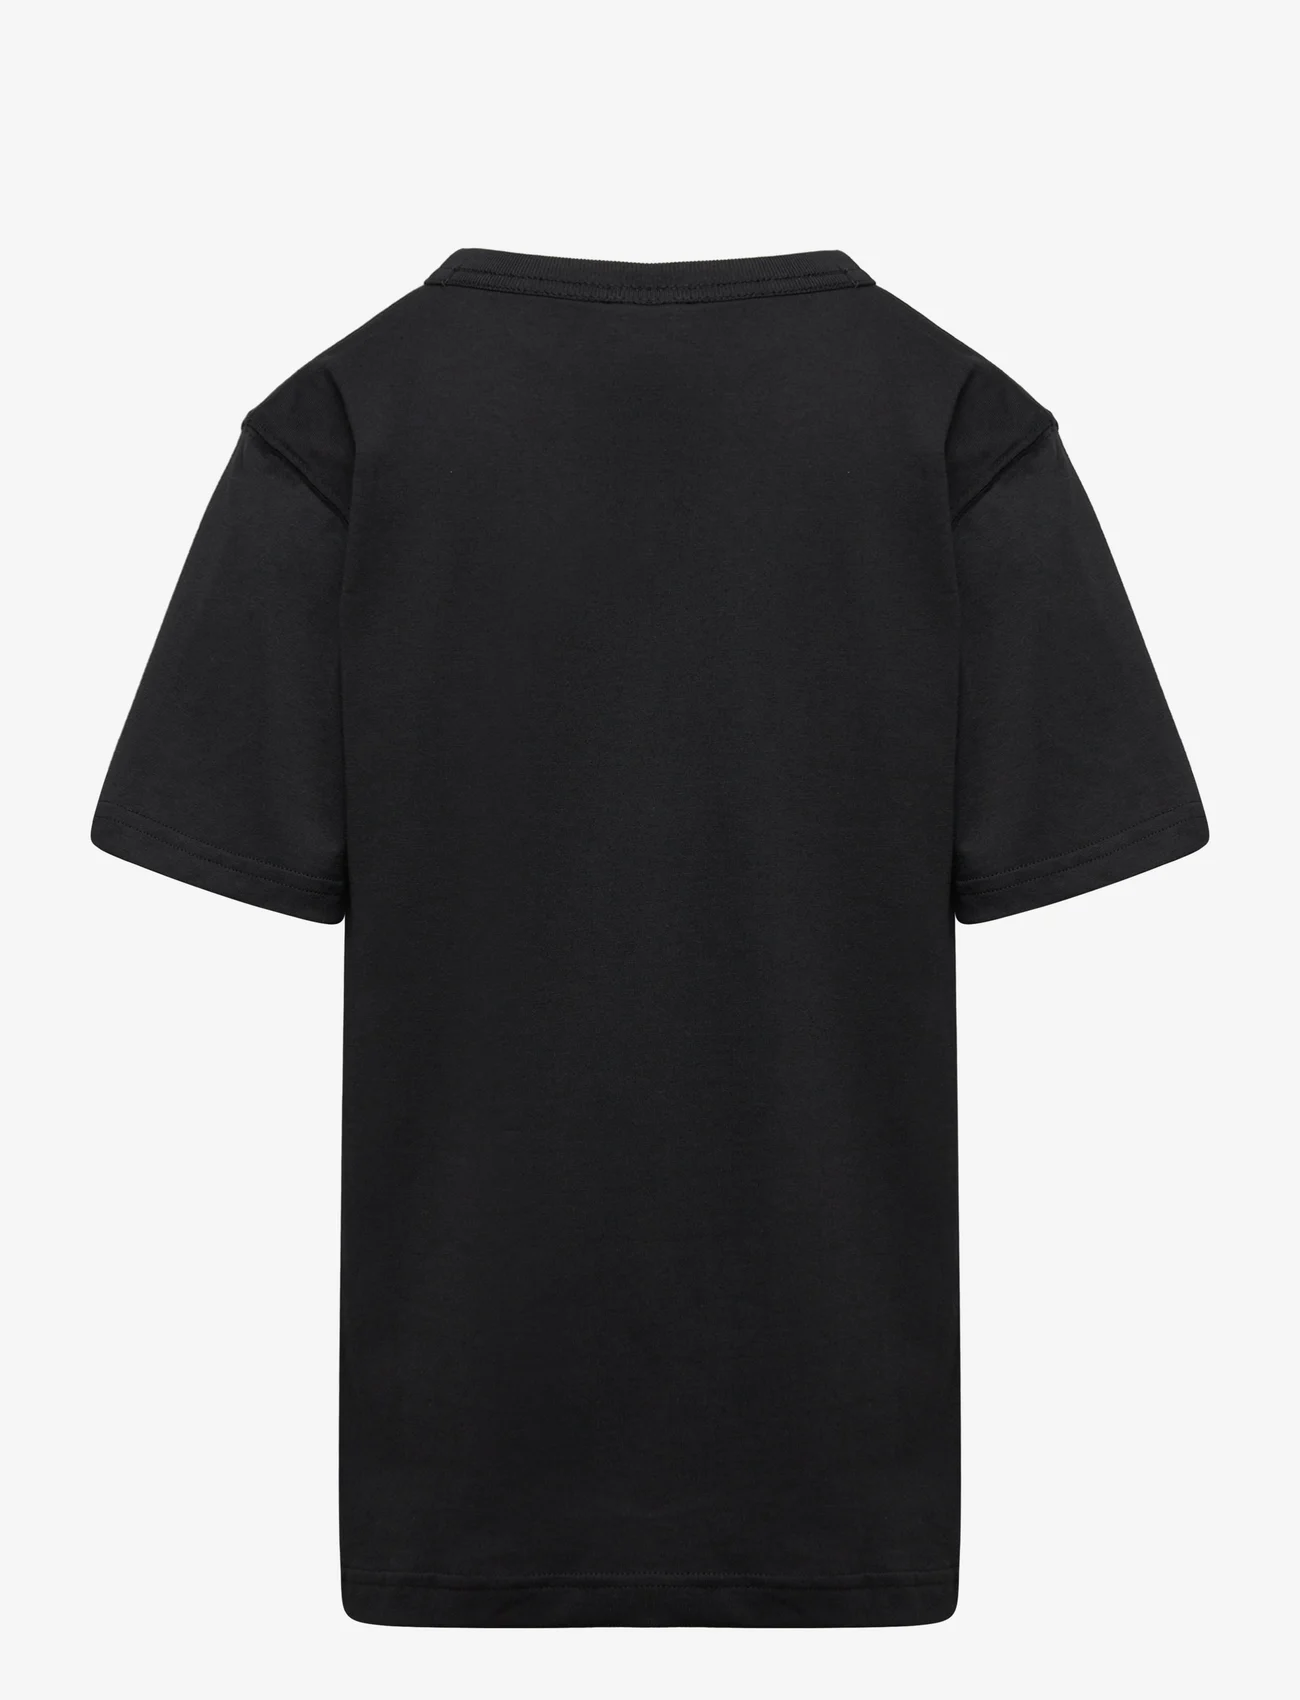 New Balance - NB Essentials Logo Tee - short-sleeved t-shirts - black - 1